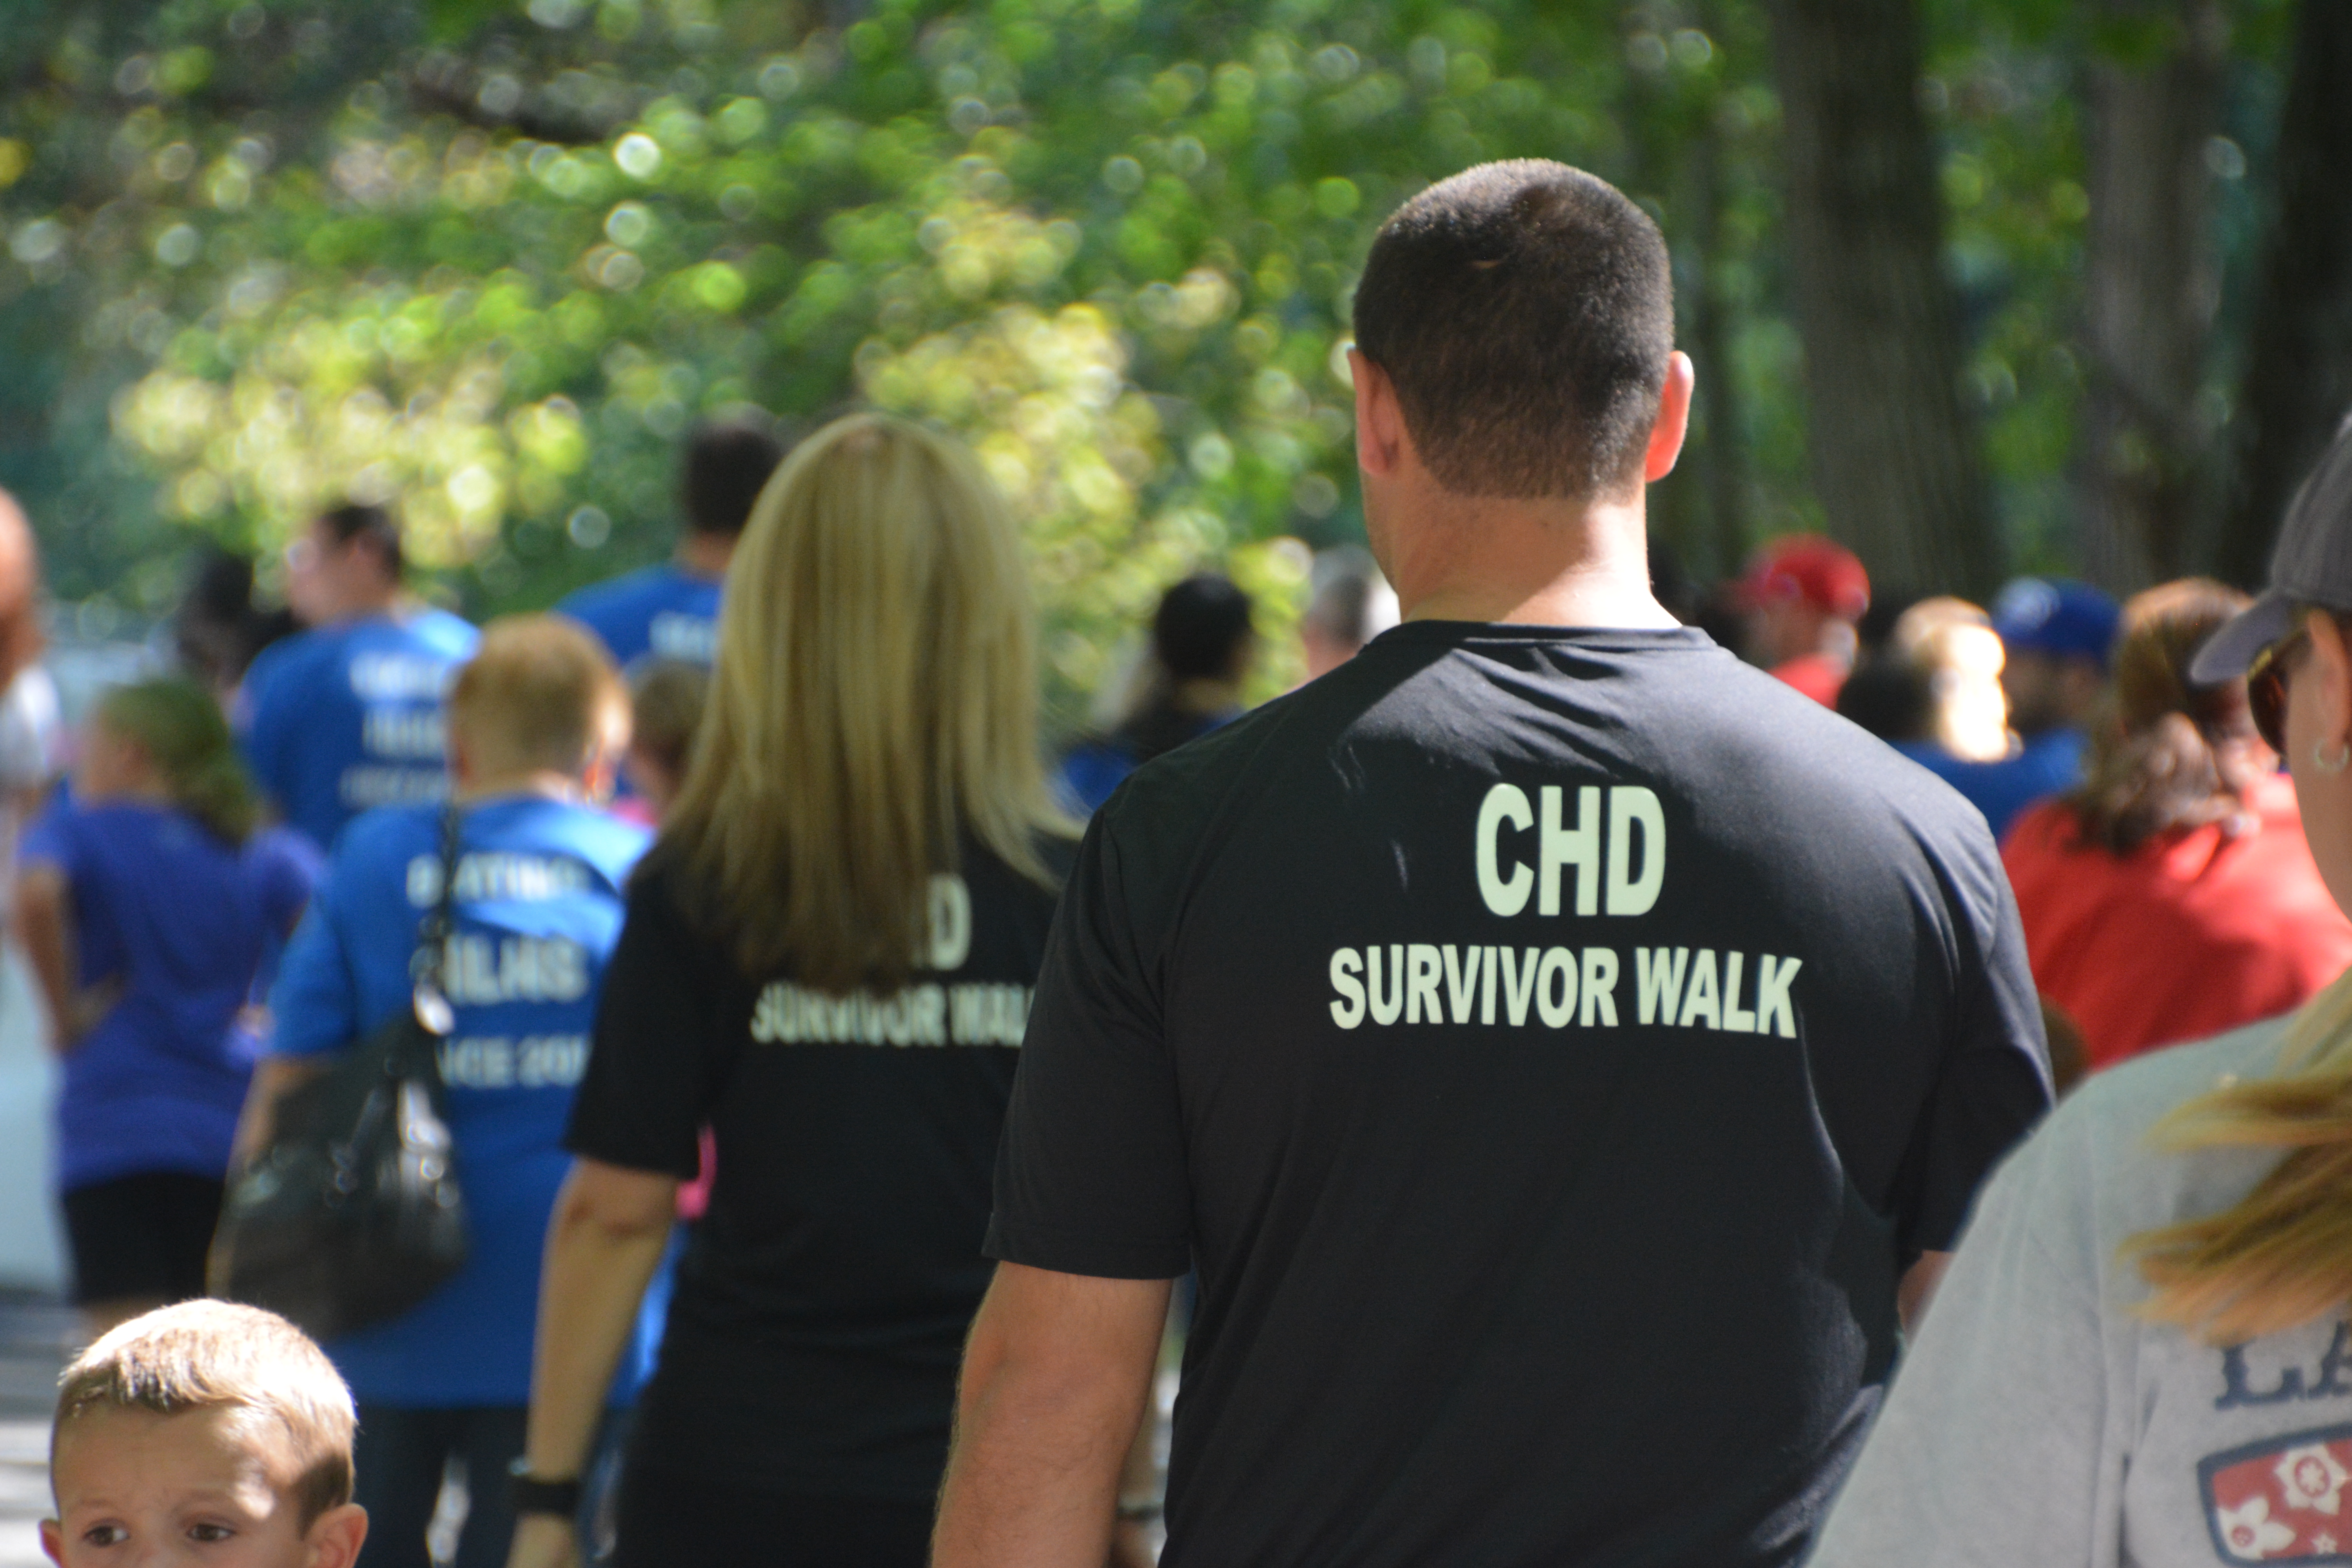 CHD Coalition Raises Over $100,000 at Annual Awareness Walk